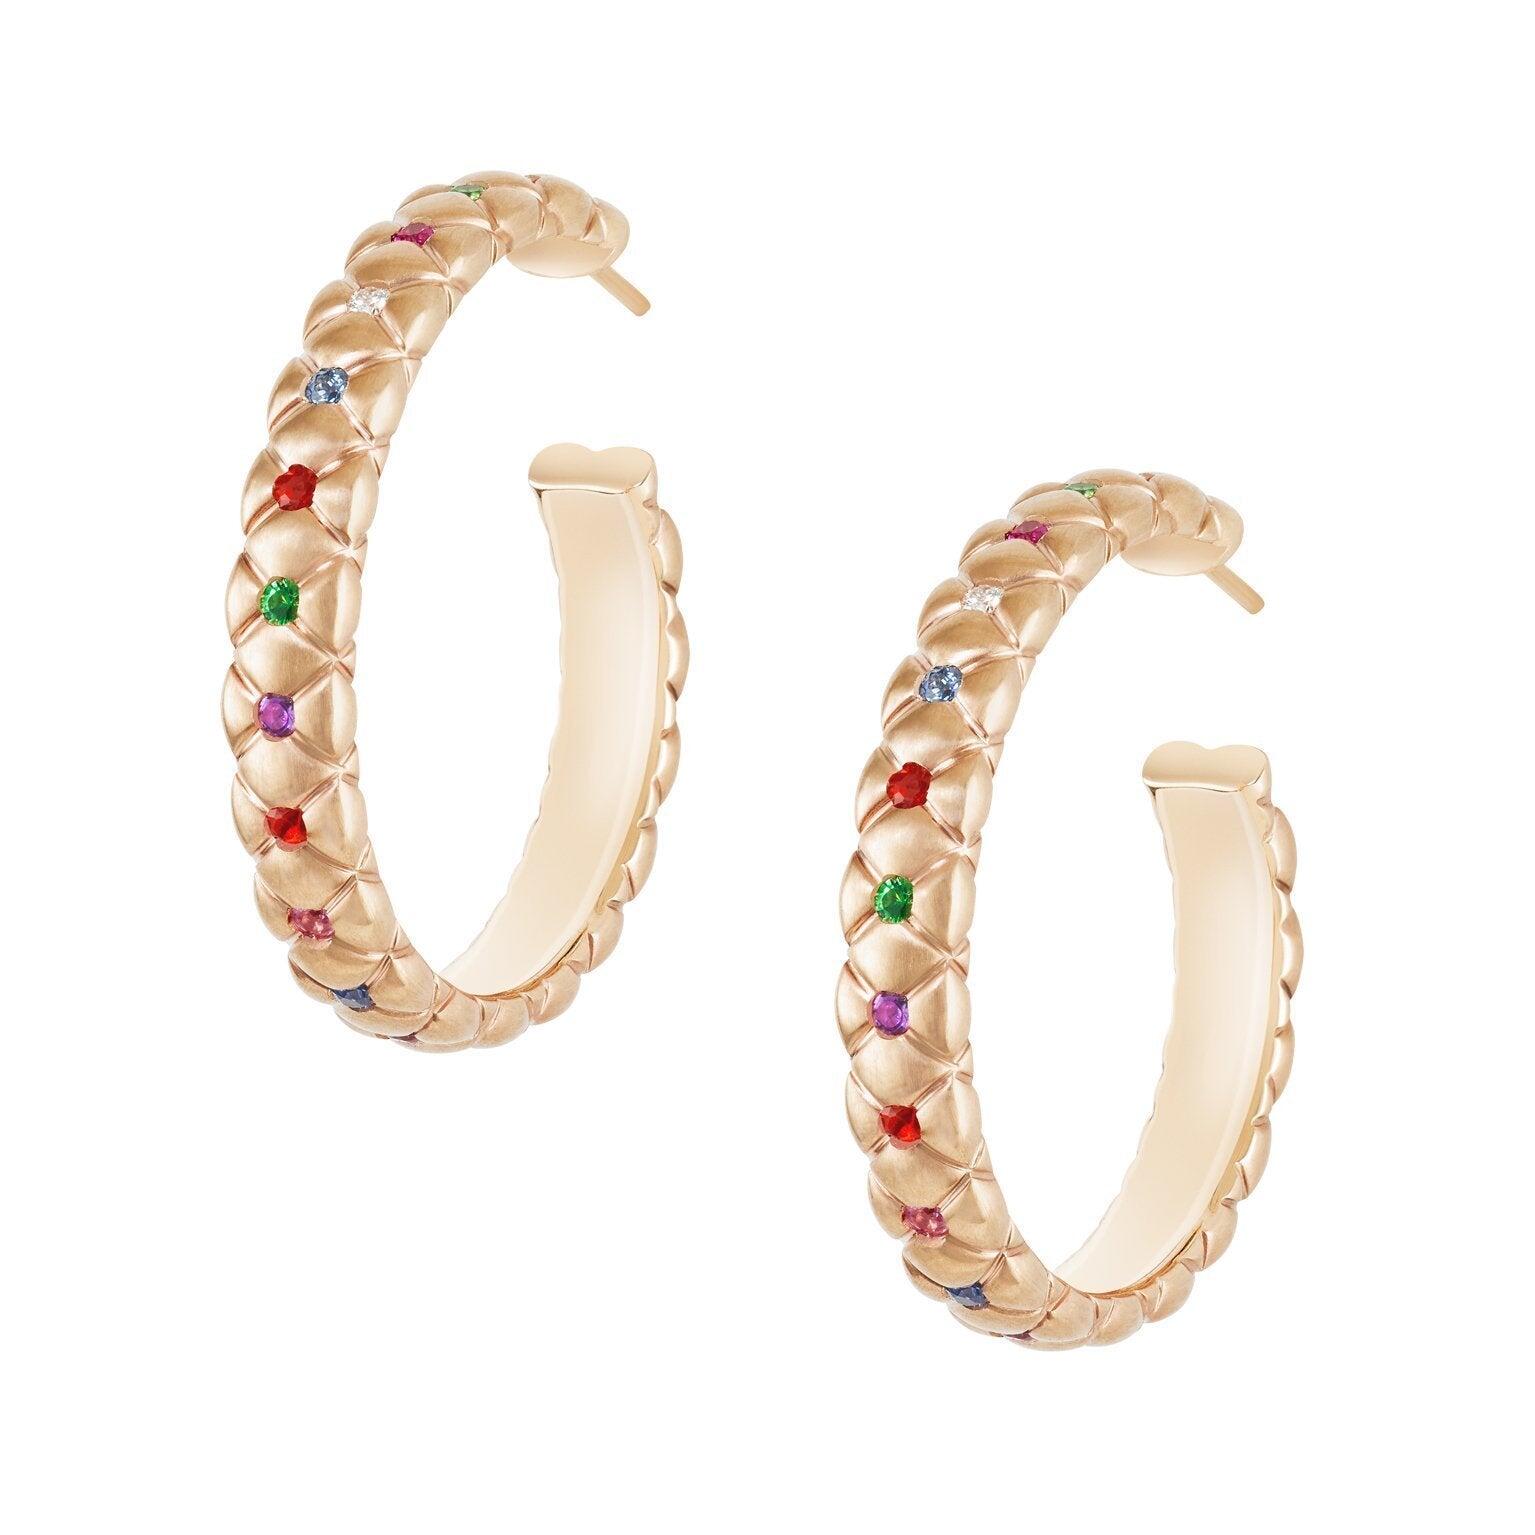 Faberge Treillage 18ct Rose Gold Multi-Coloured Hoop Earrings